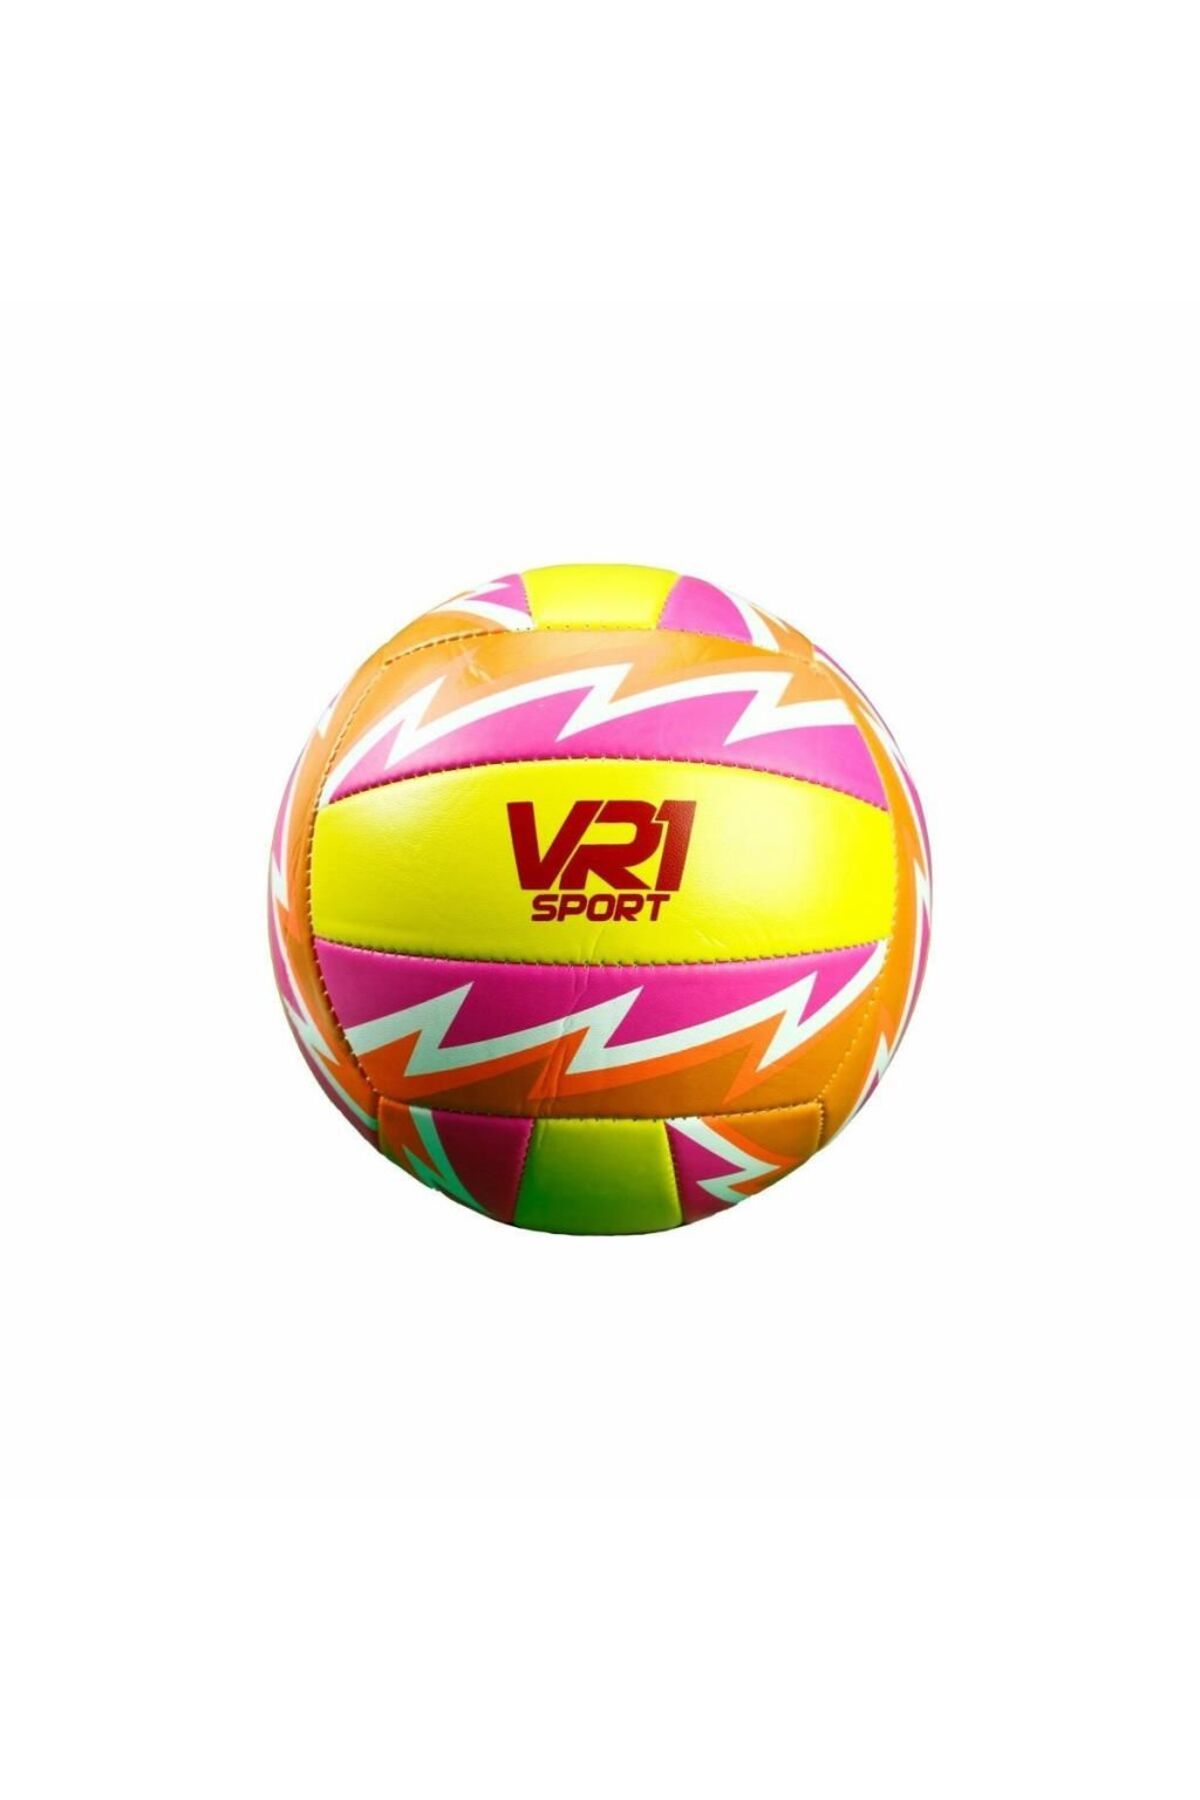 KTYRA52 XL-02 VR1 Sport Voleybol Topu No: 5